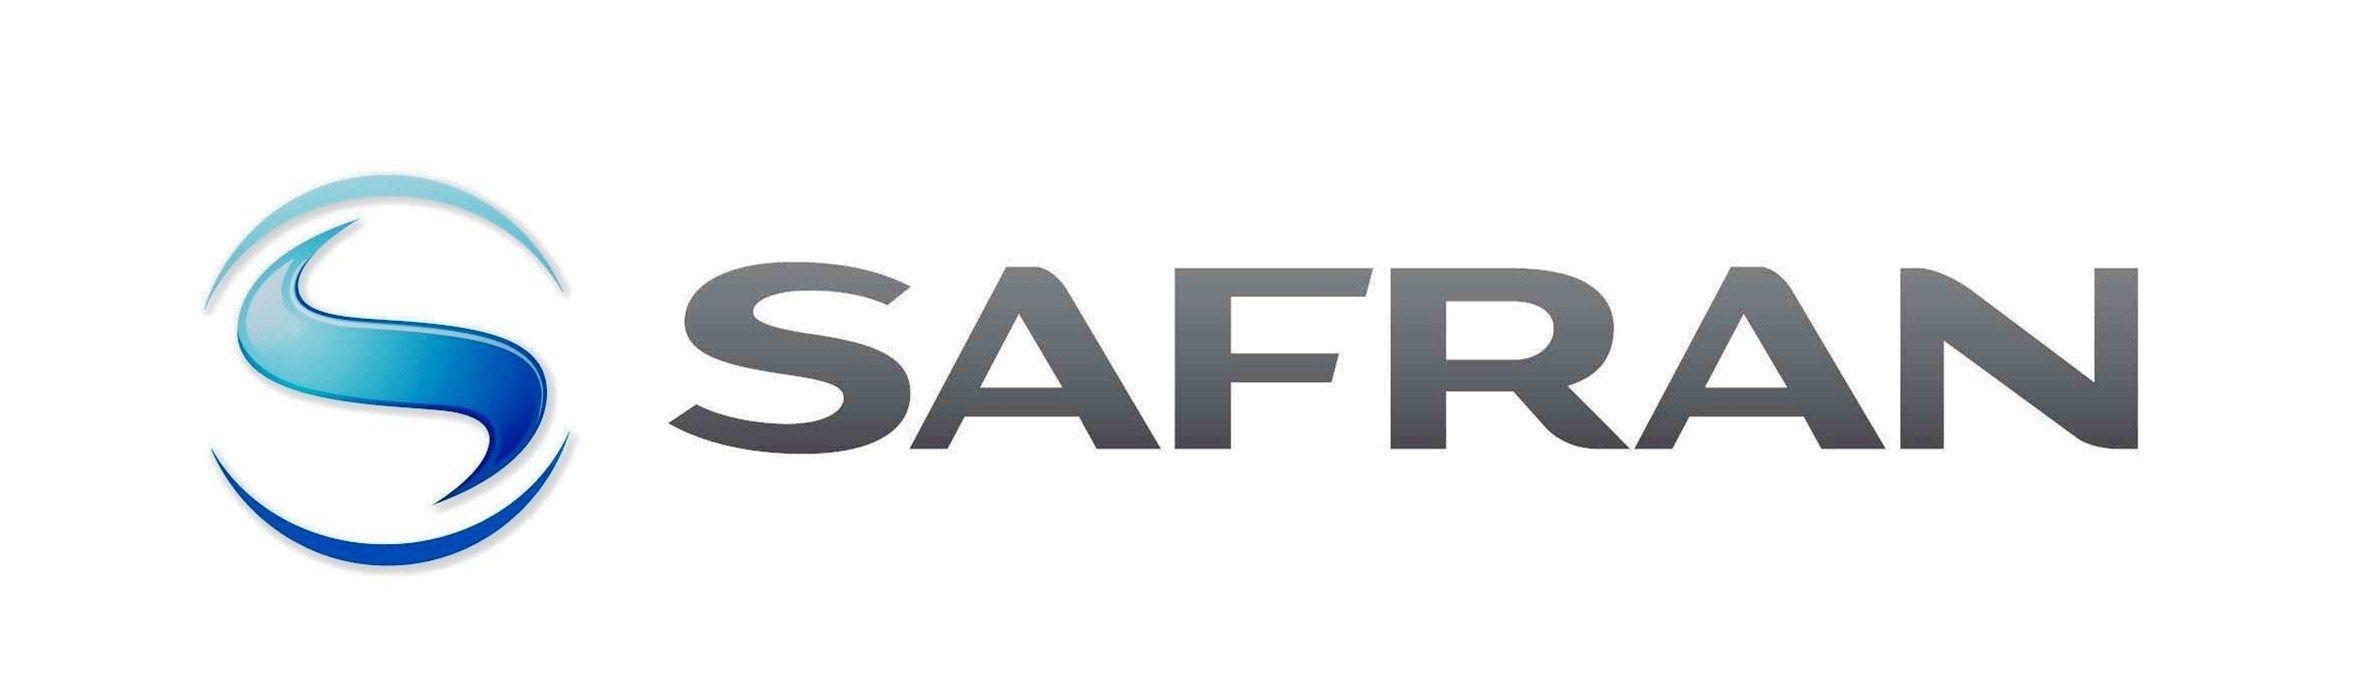 Safran Logo - safran-logo - Home Security 1st